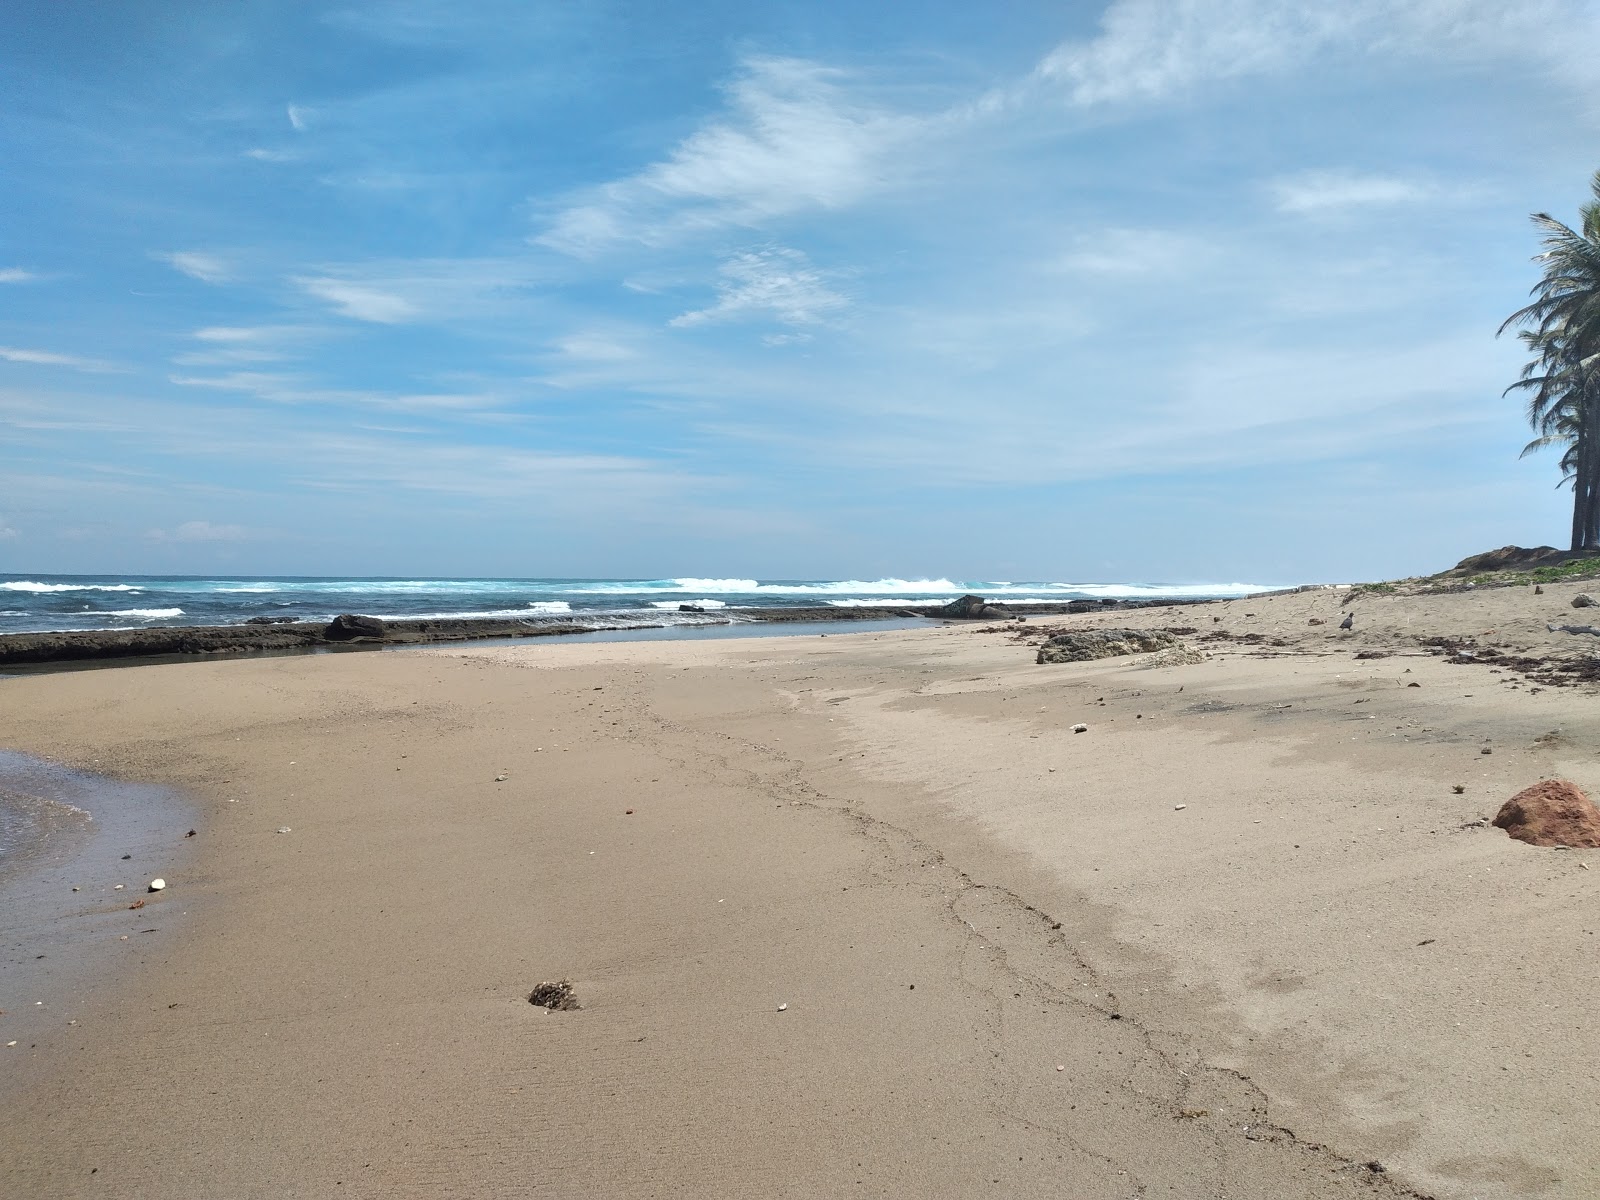 Fotografija Mar Azul beach z prostorna obala